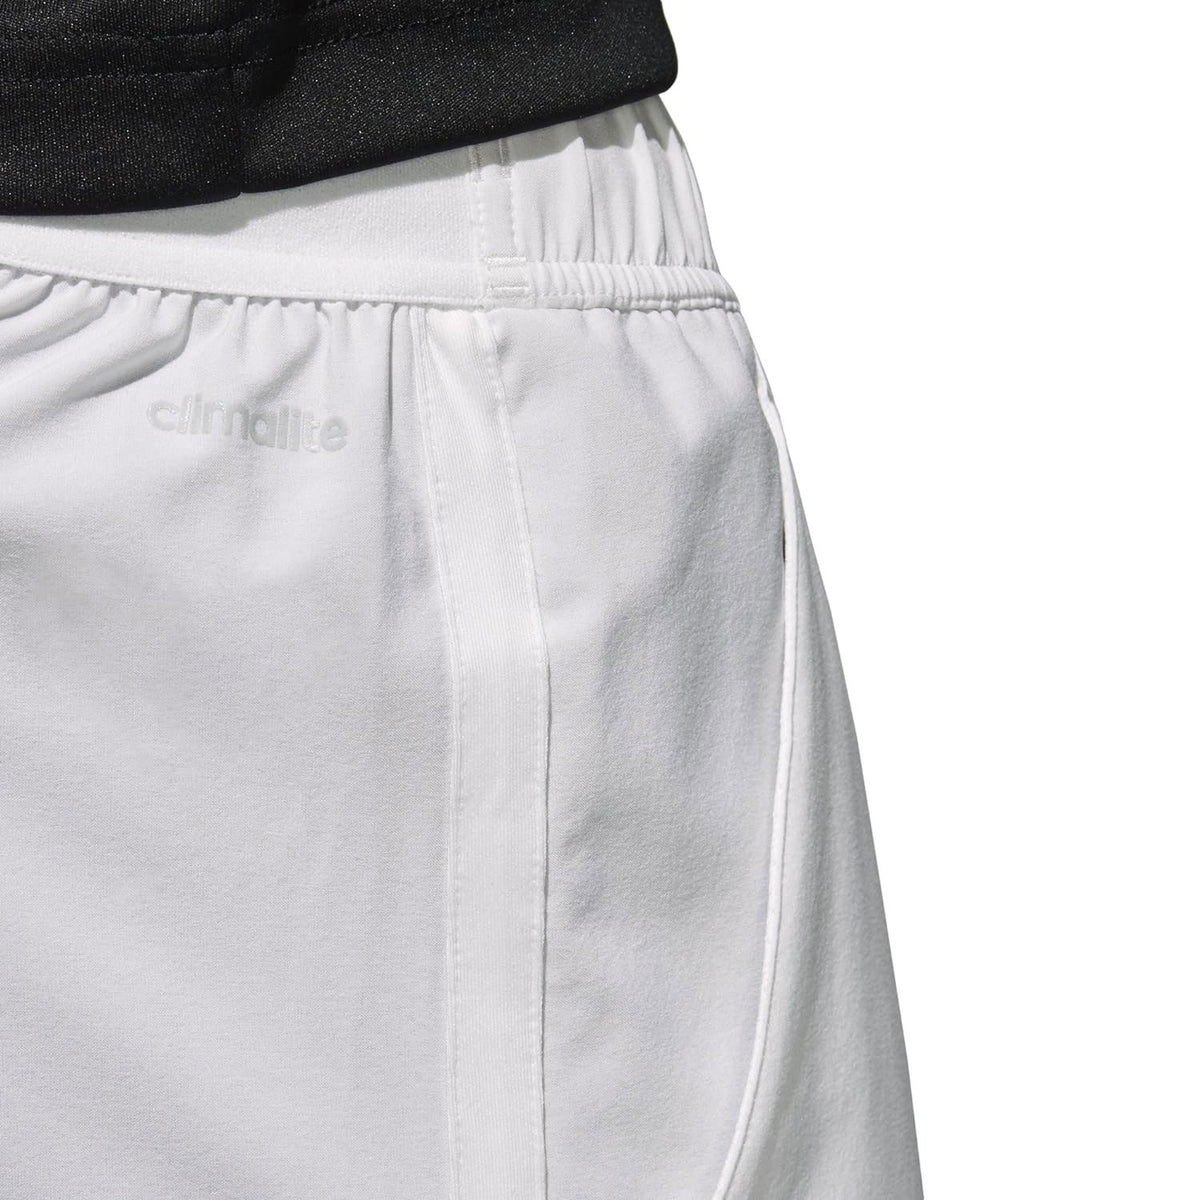 Adidas Mens Climalite Advantage Tennis Training Shorts - White - XS